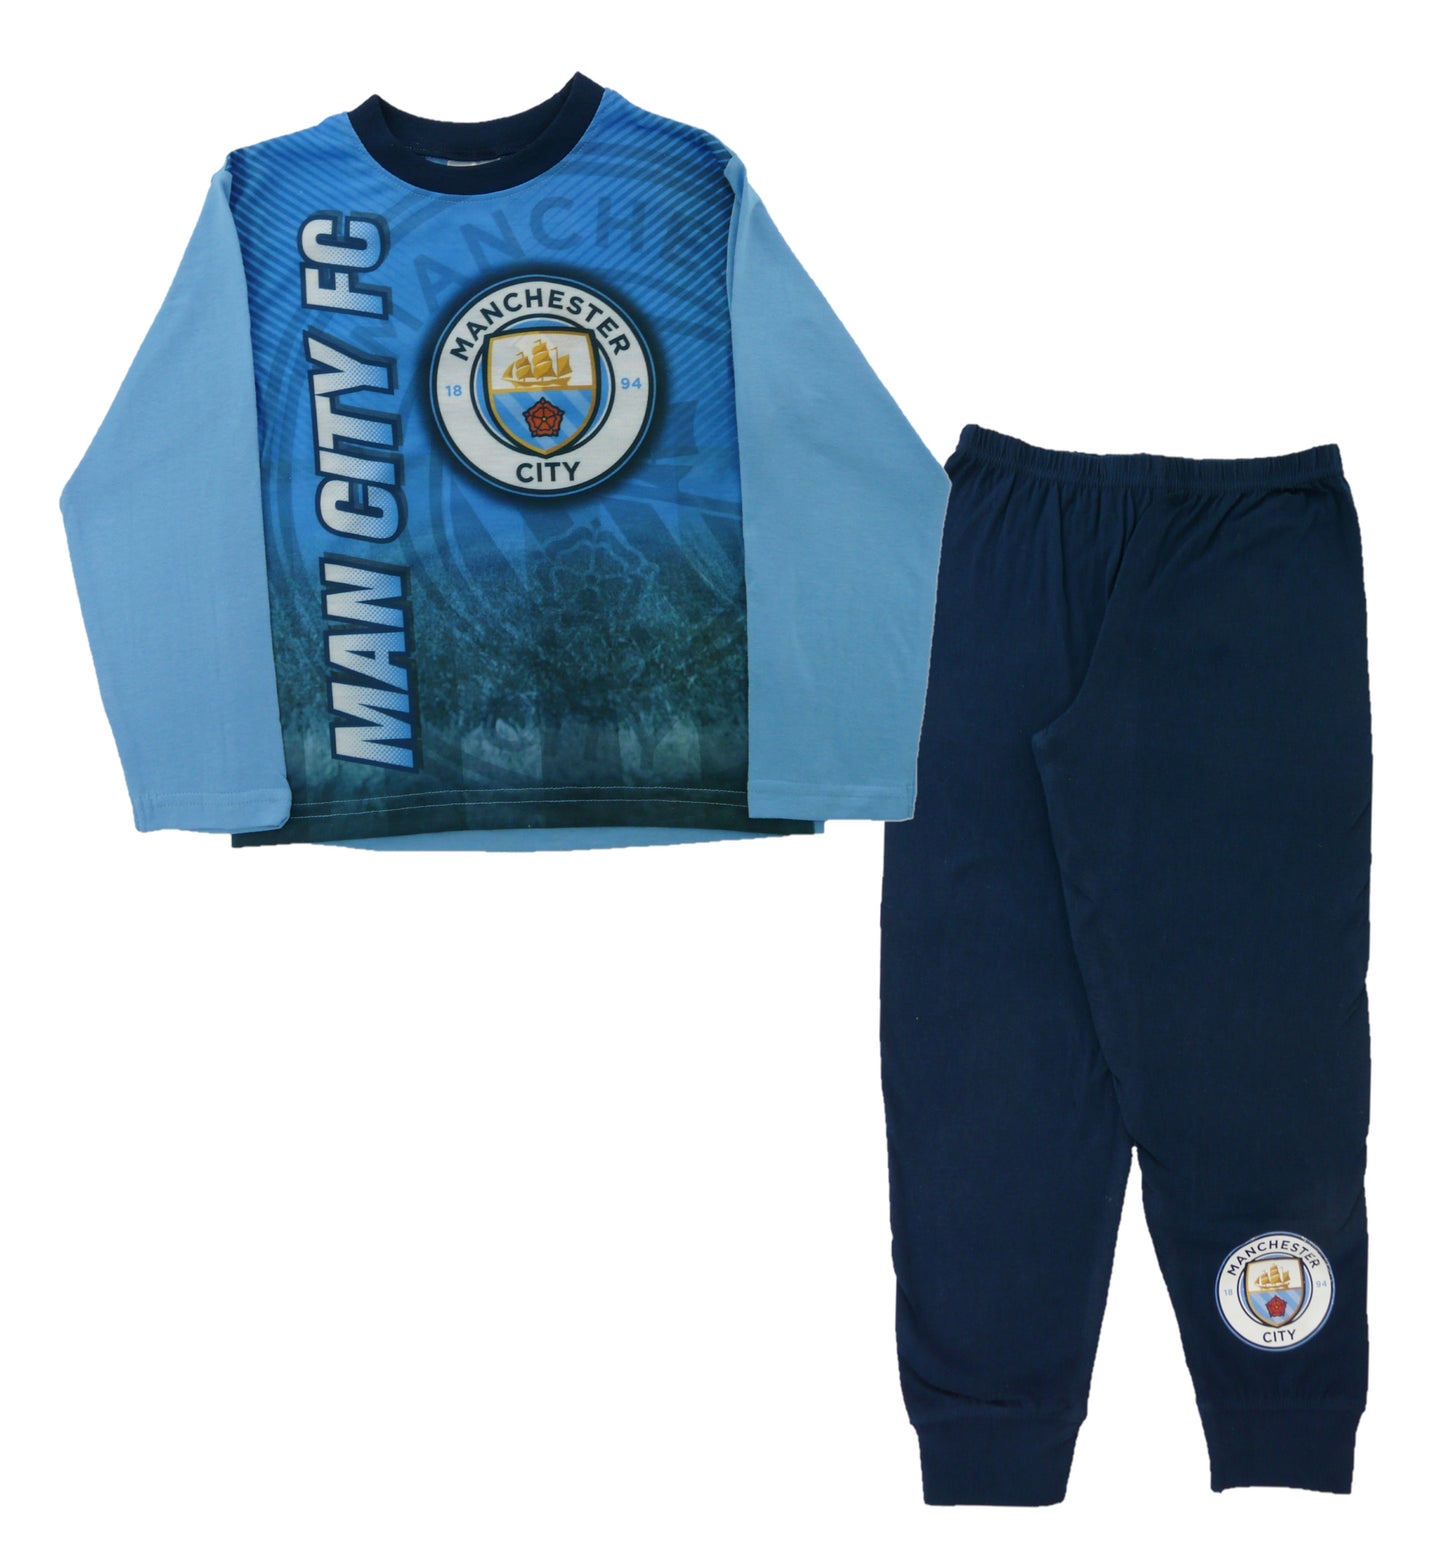 Manchester City Football Club "Man City FC" pyjamas